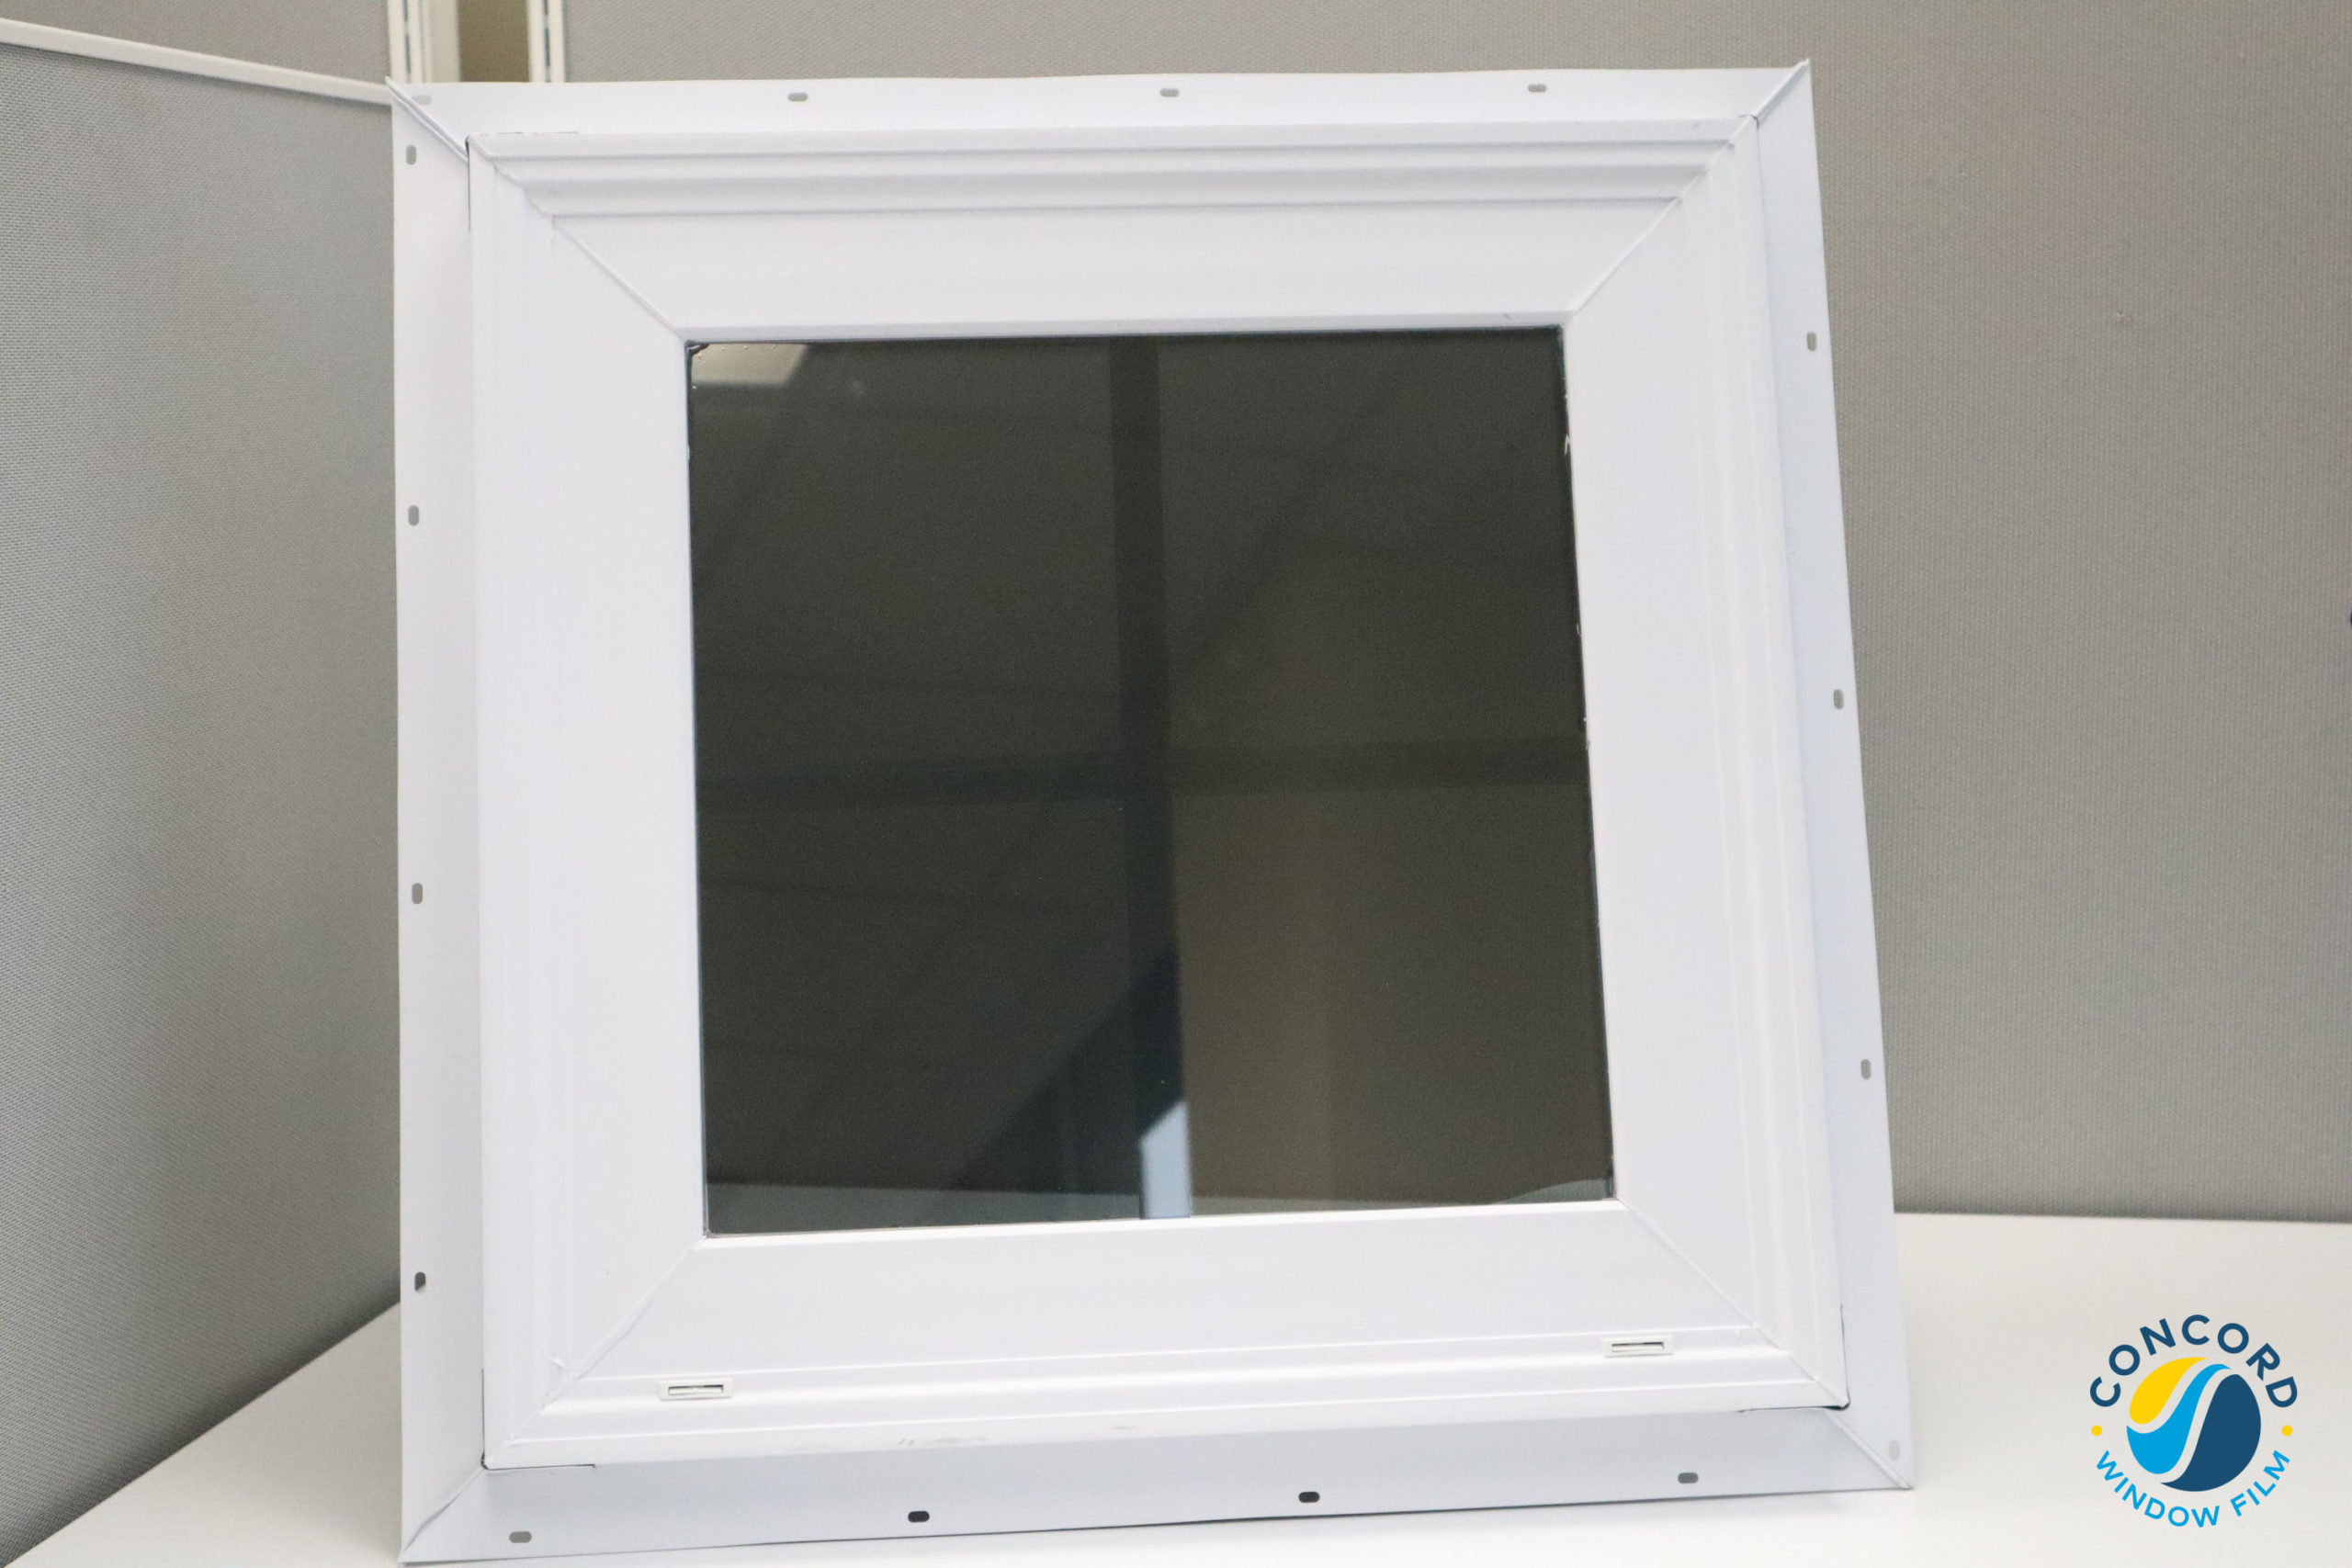 Small window with window film installed